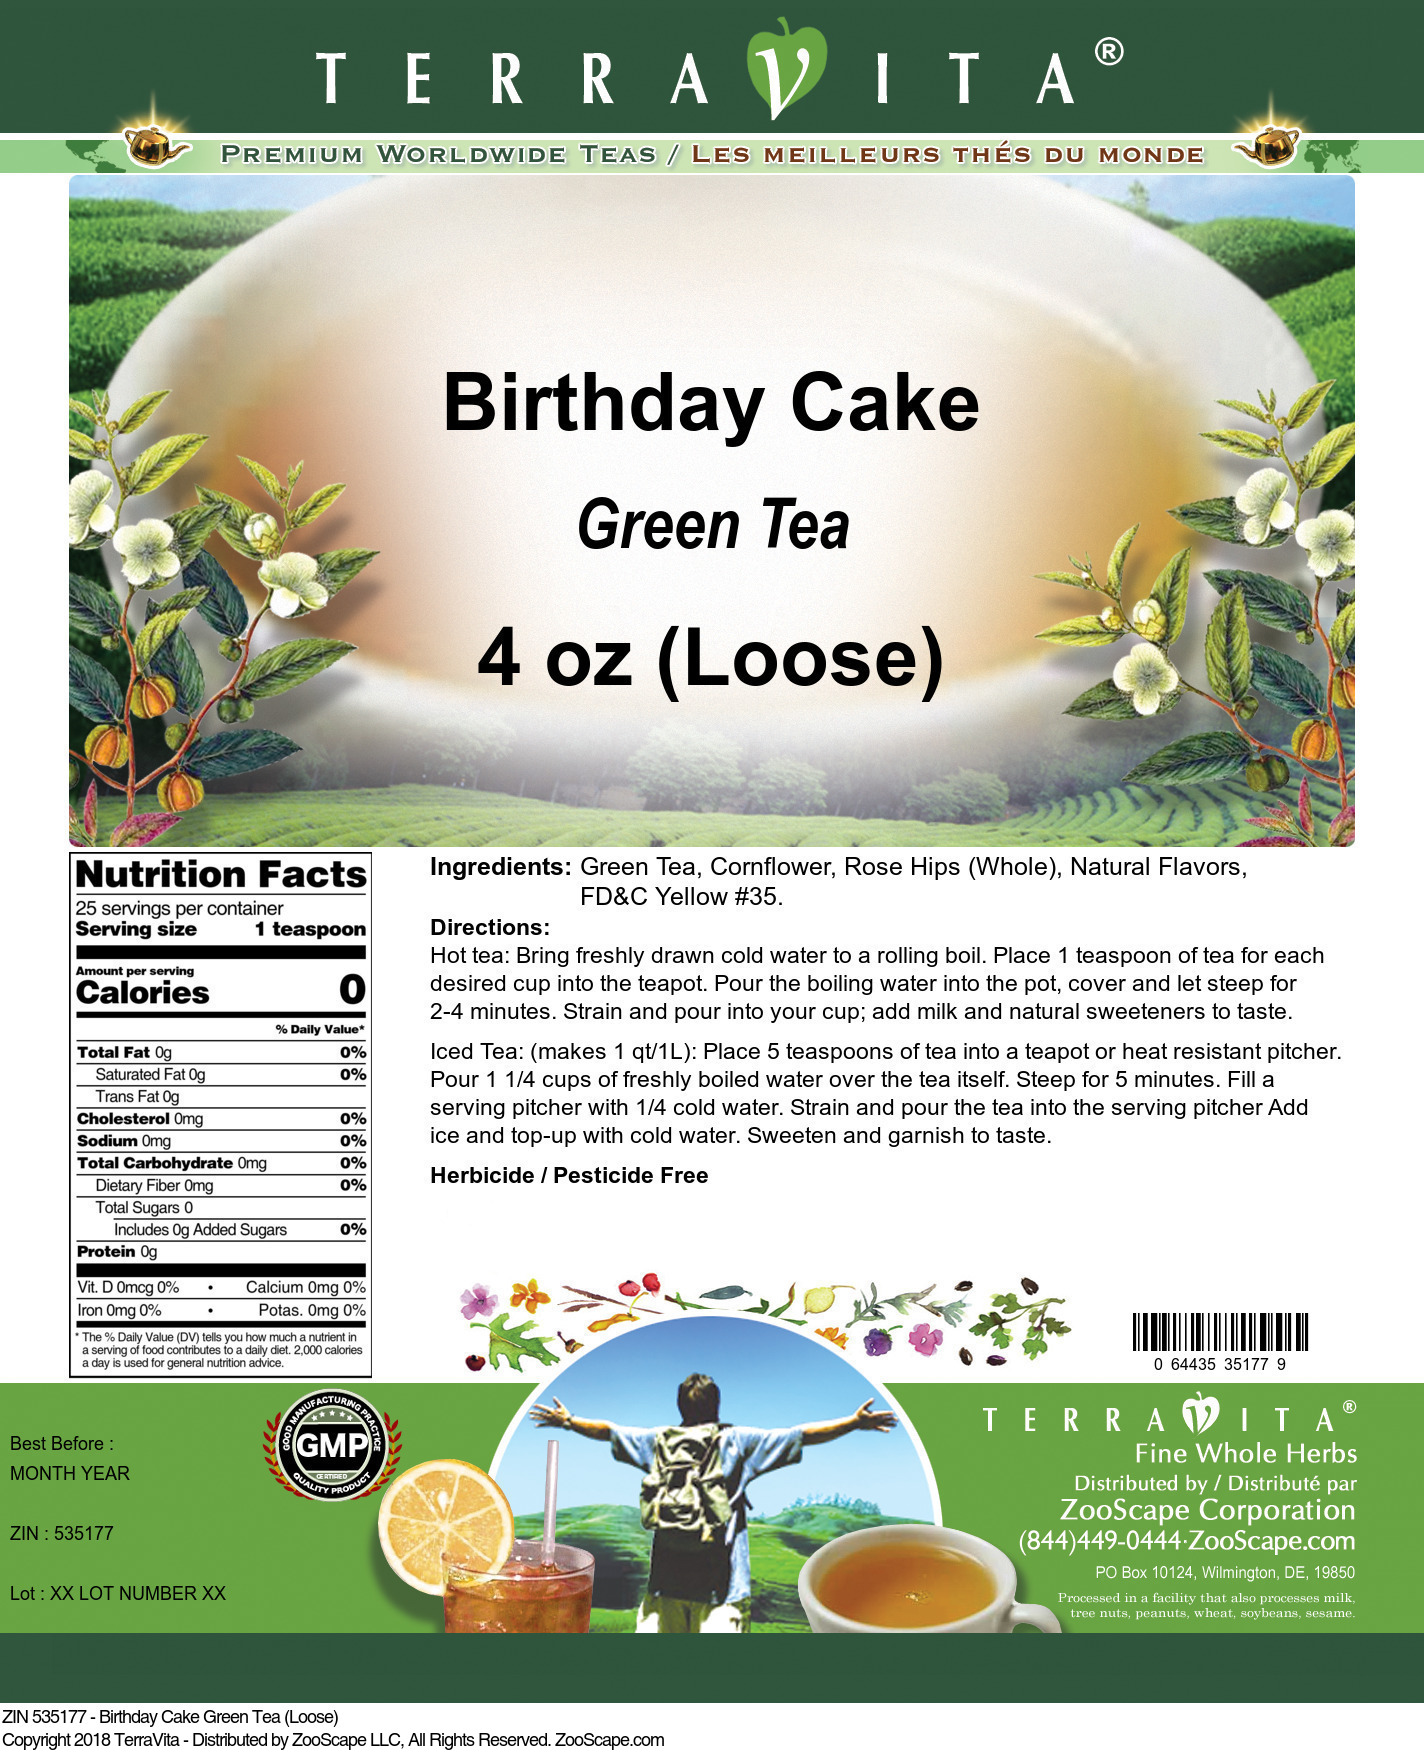 Birthday Cake Green Tea (Loose) - Label